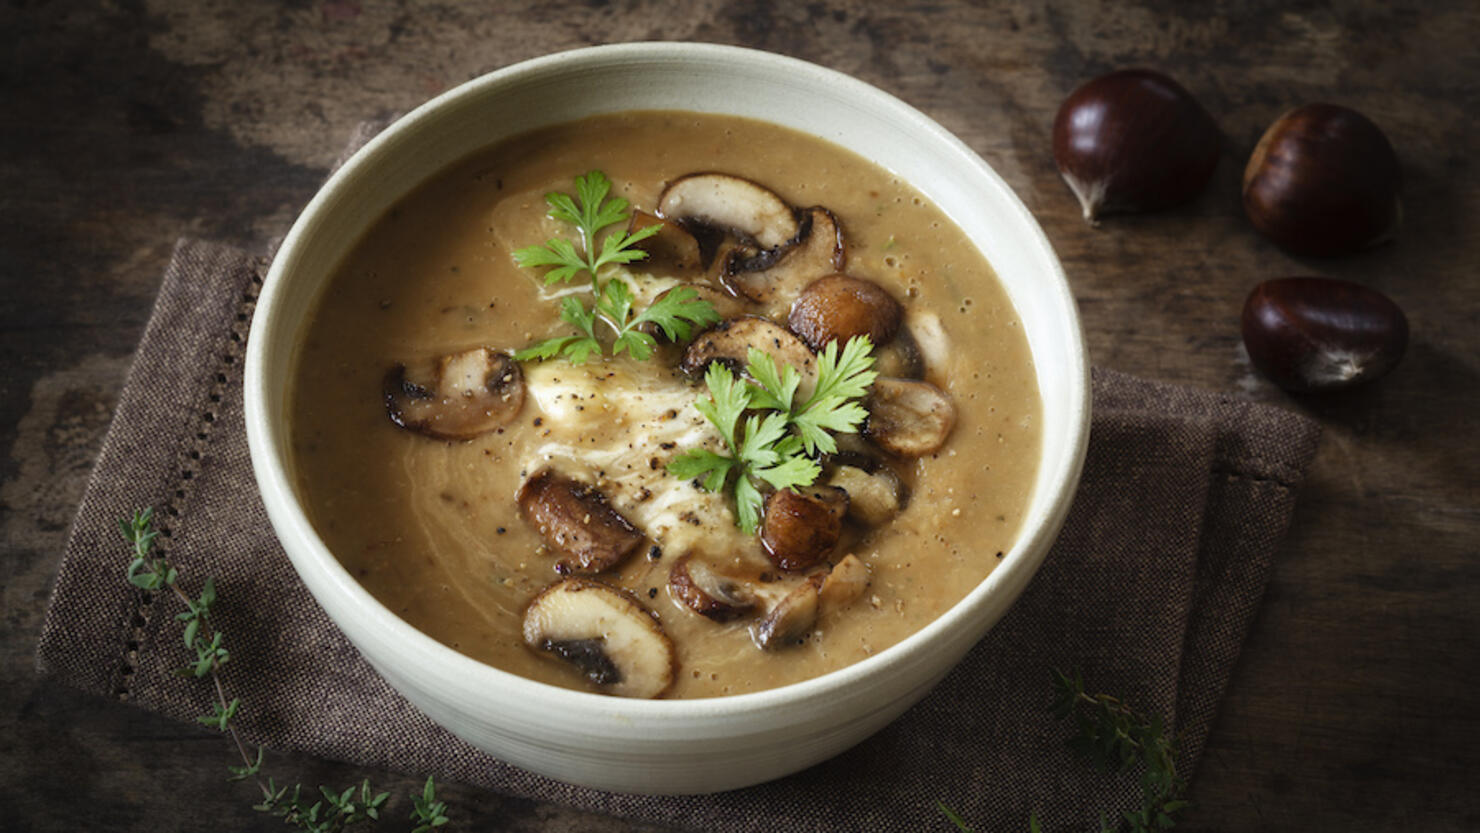 Sweet chestnut mushroom soup